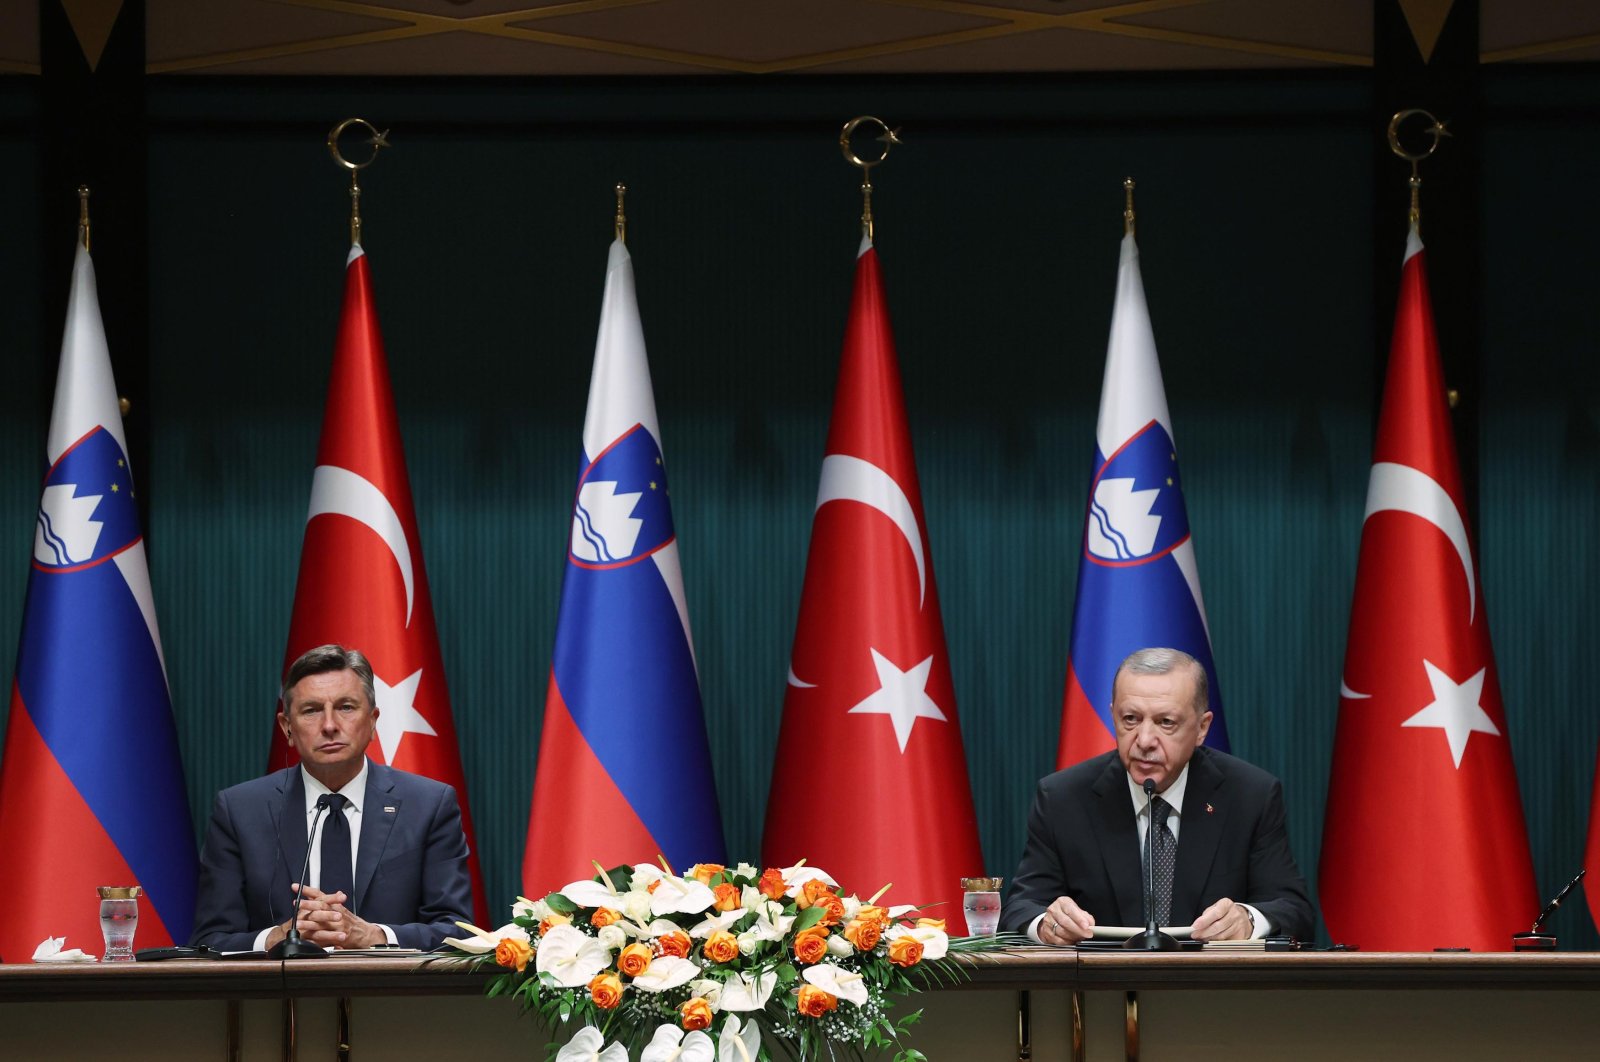 President Recep Tayyip Erdoğan (R) and his Slovenian counterpart Borut Pahor hold a joint press conference in the capital Ankara, Türkiye, Aug. 10, 2022. (DHA Photo)